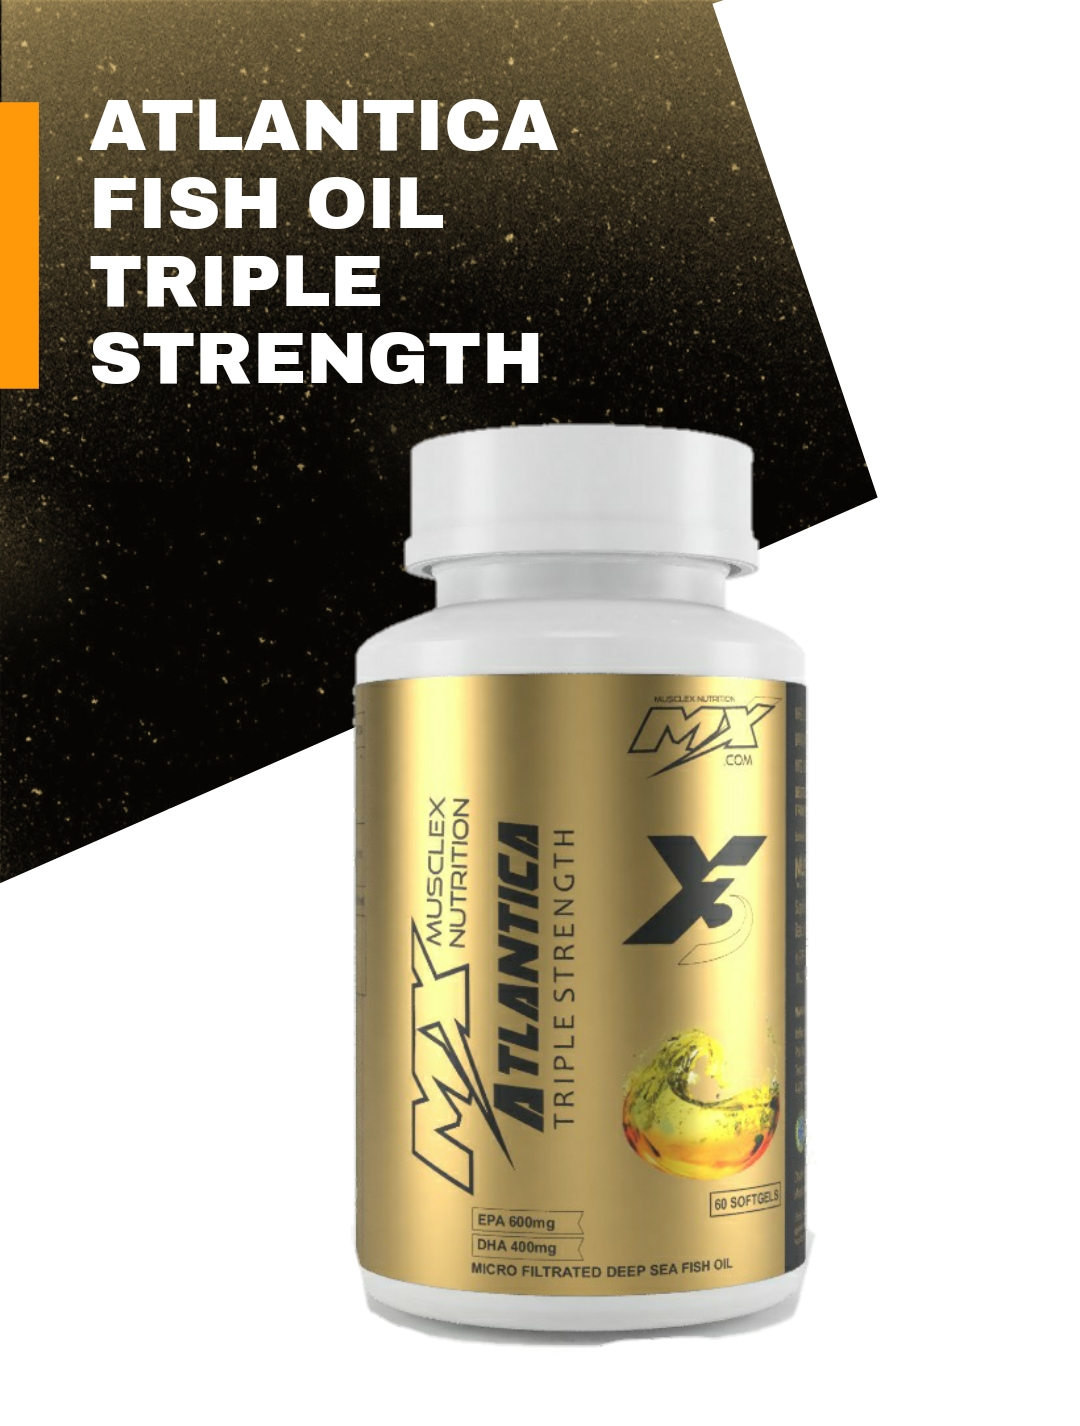 Fish oil tripple strength